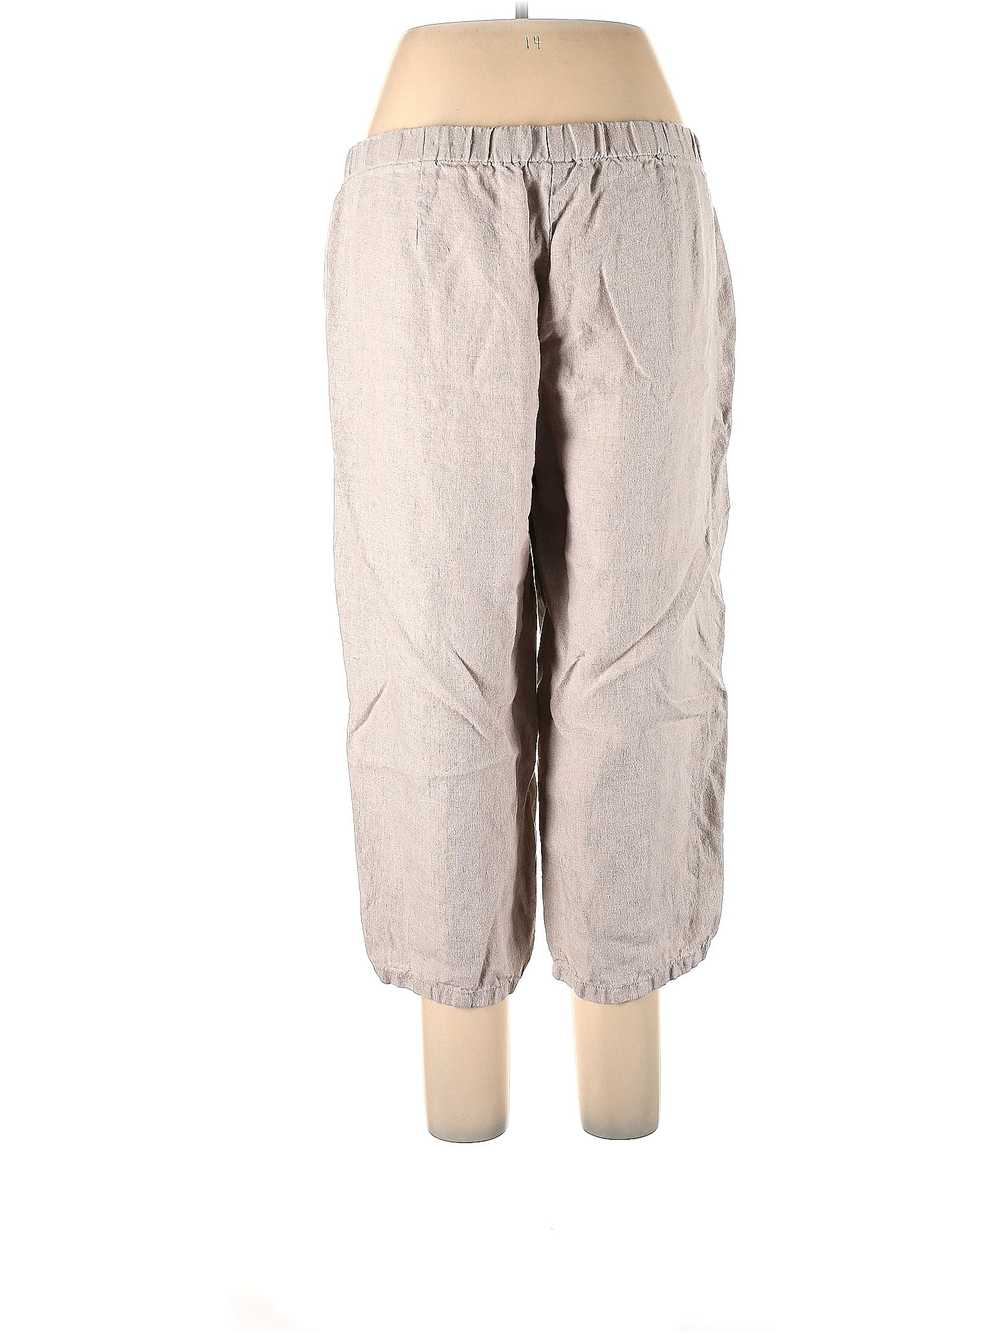 J.Jill Women Gray Linen Pants L Petites - image 2